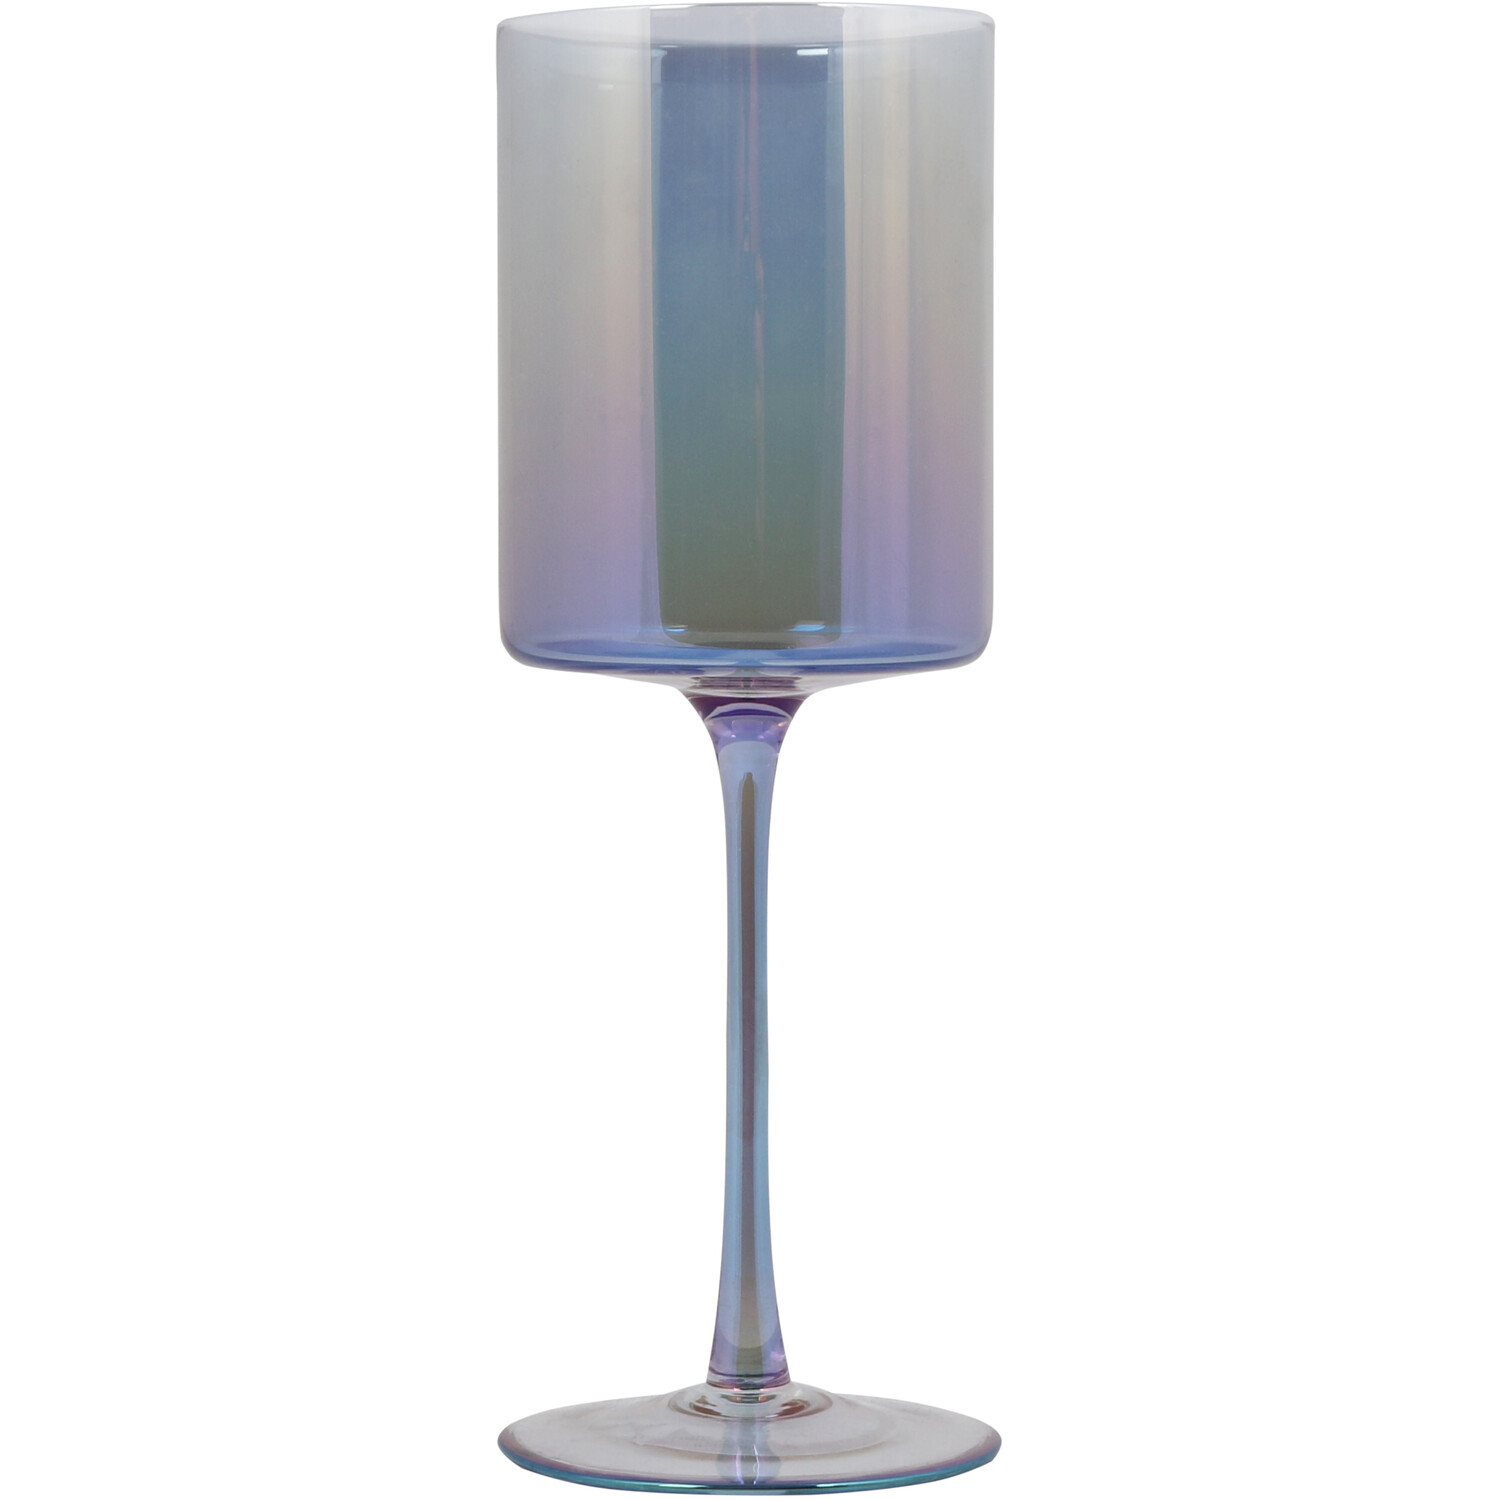 Iryssa Lustre Wine Glass - Blue Image